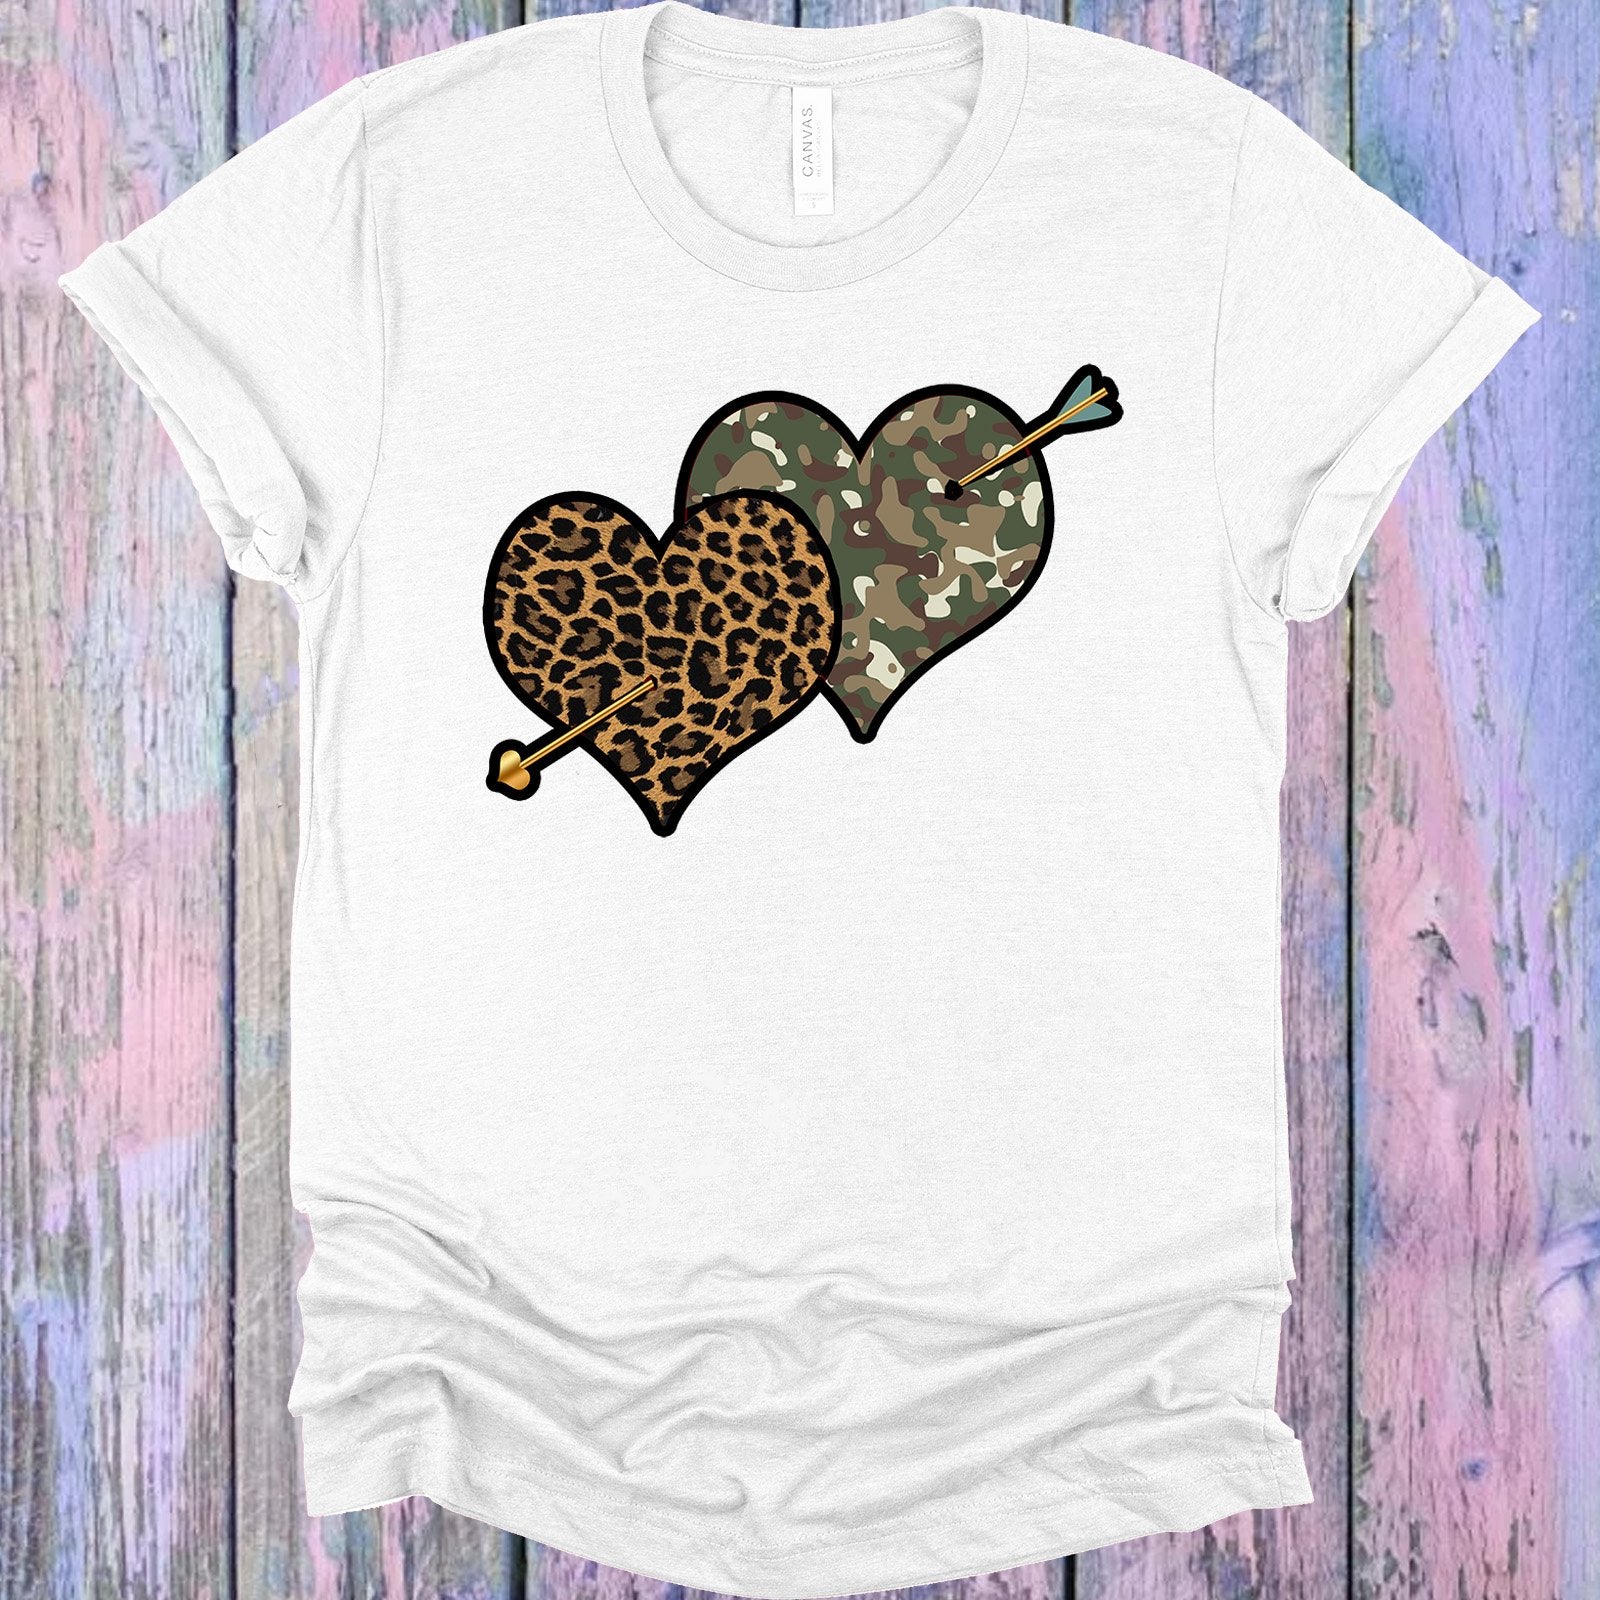 Leopard Camo Hearts Graphic Tee Graphic Tee